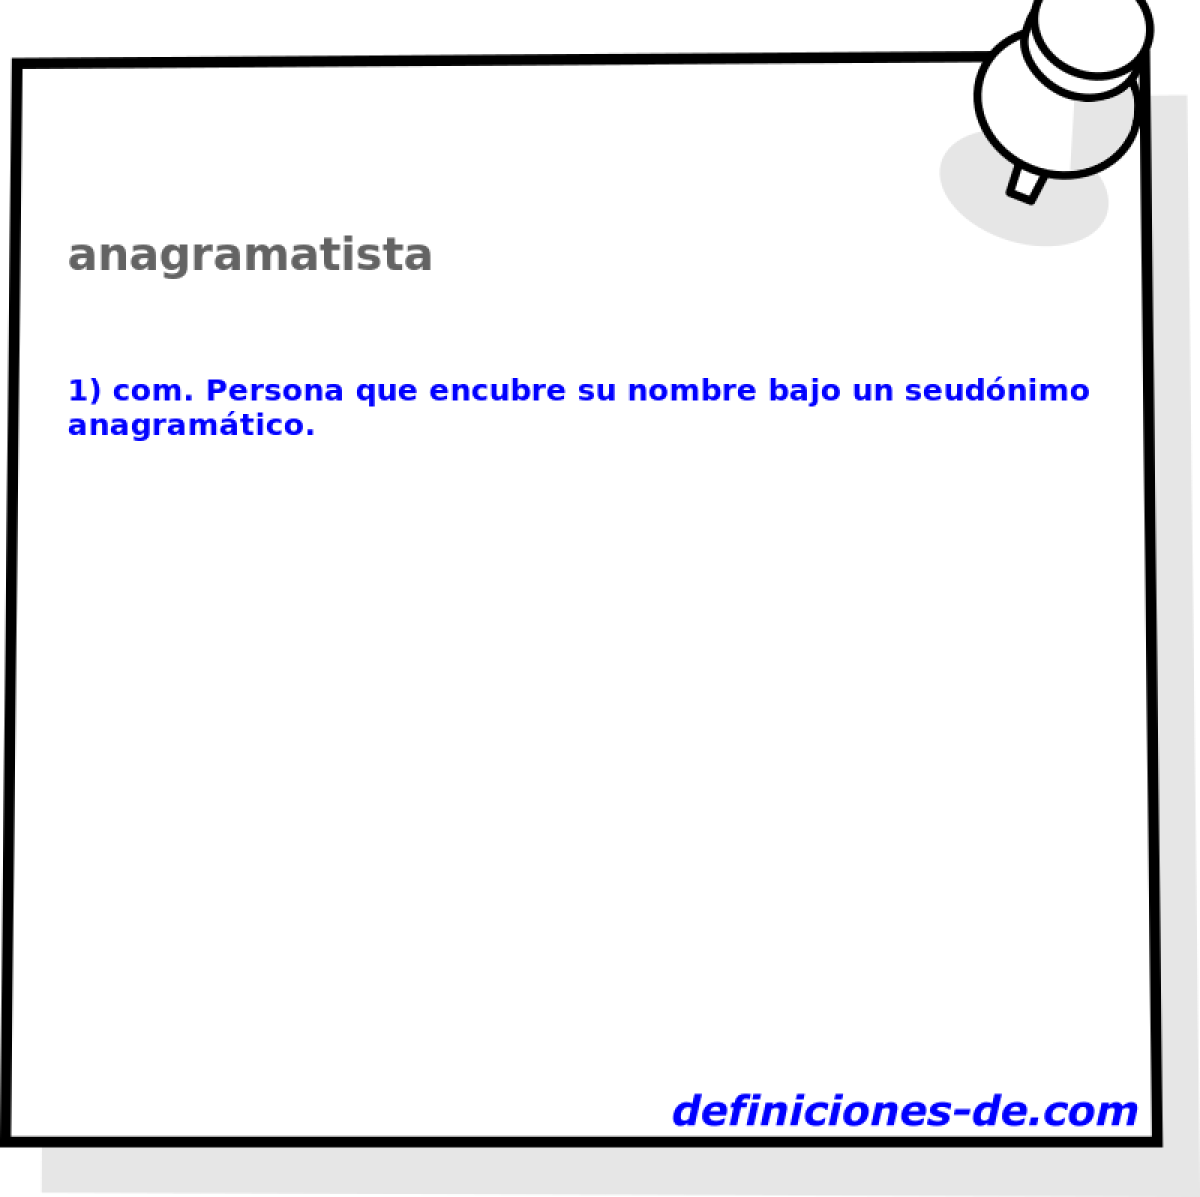 anagramatista 